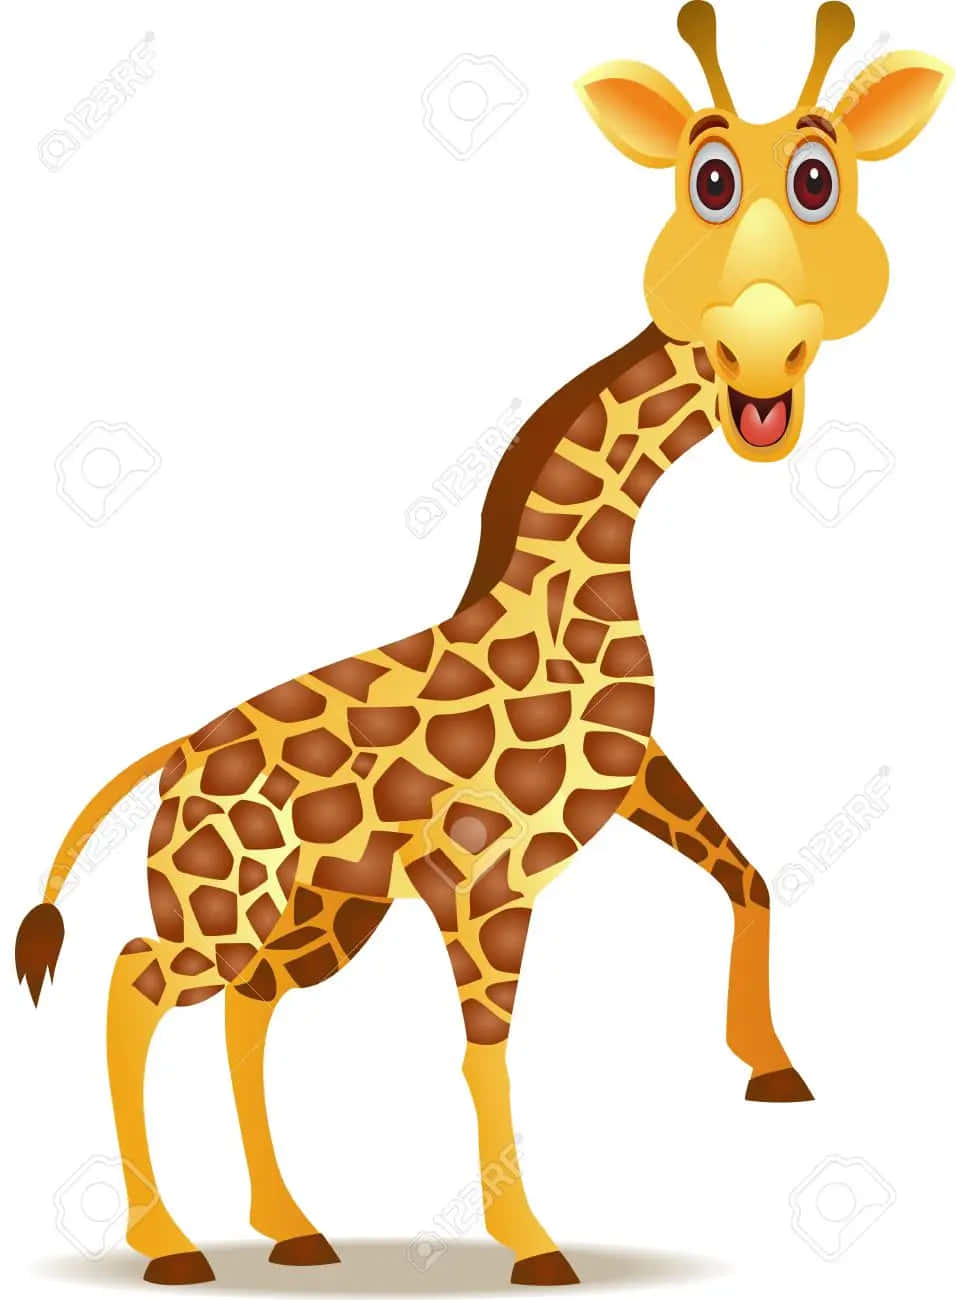 Denne sjove giraf kan ikke skjule sin glæde!